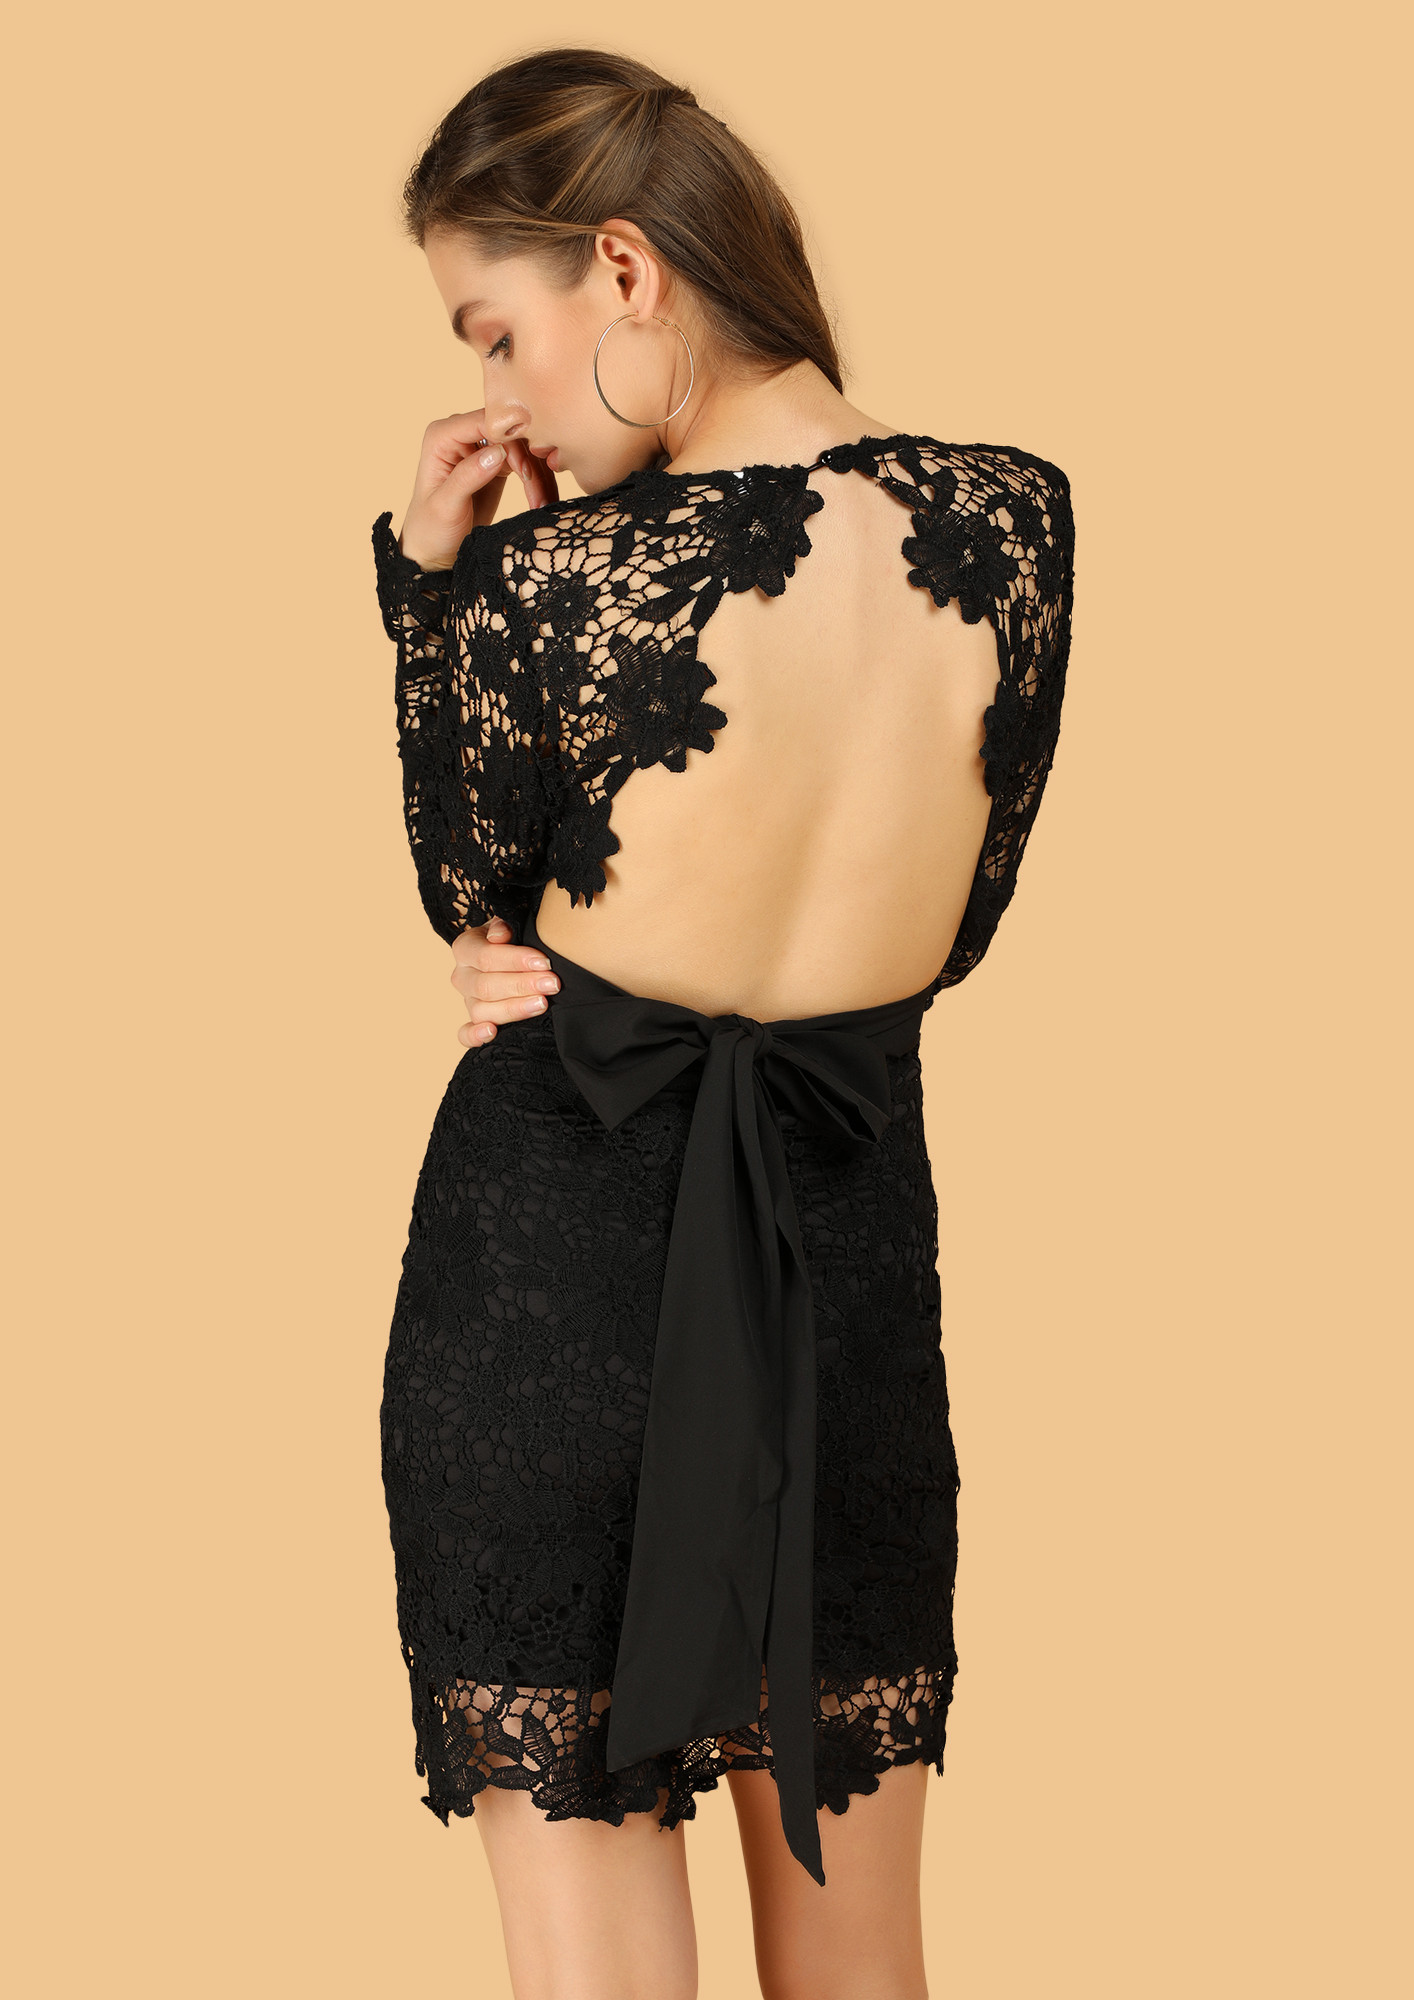  Women's Black Lace Dress